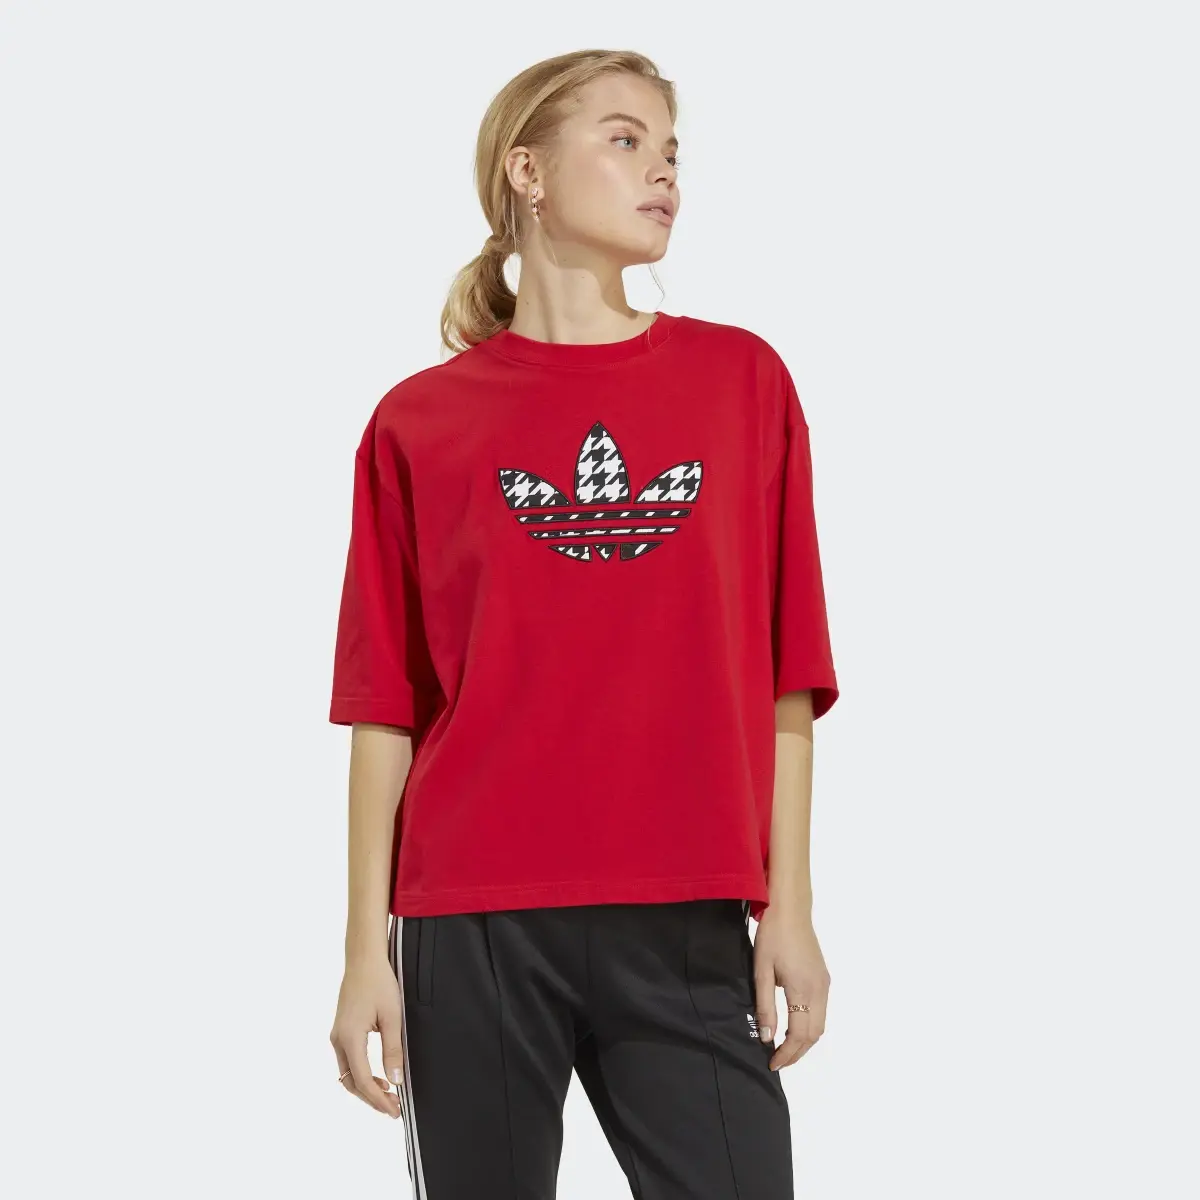 Adidas T-shirt Originals Houndstooth Trefoil Infill. 2